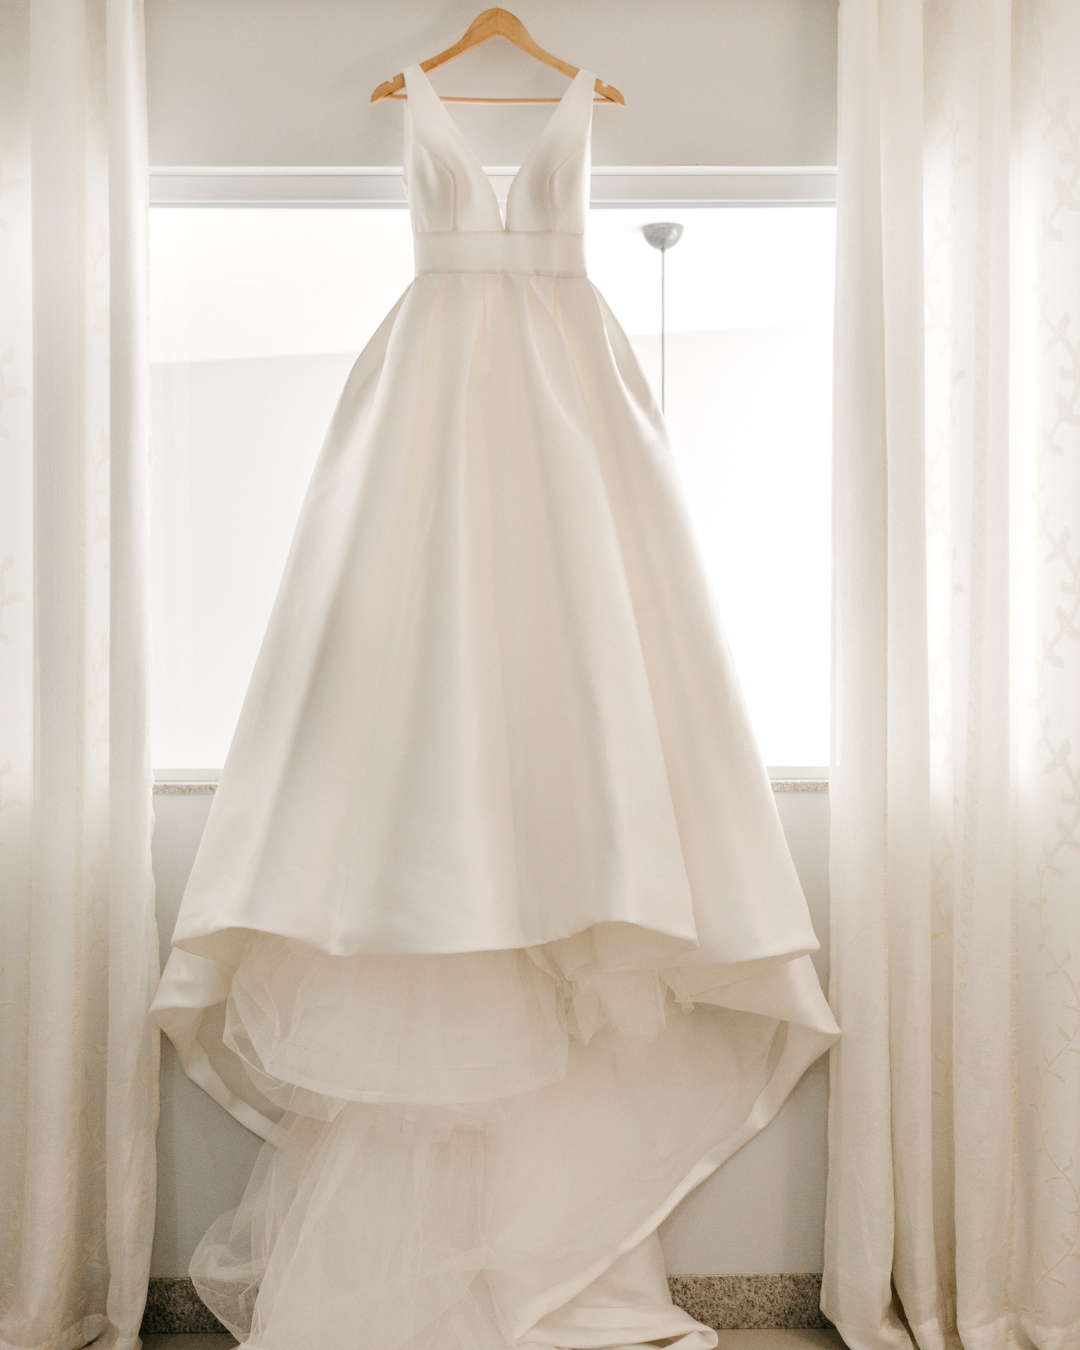 clean wedding dress hanging